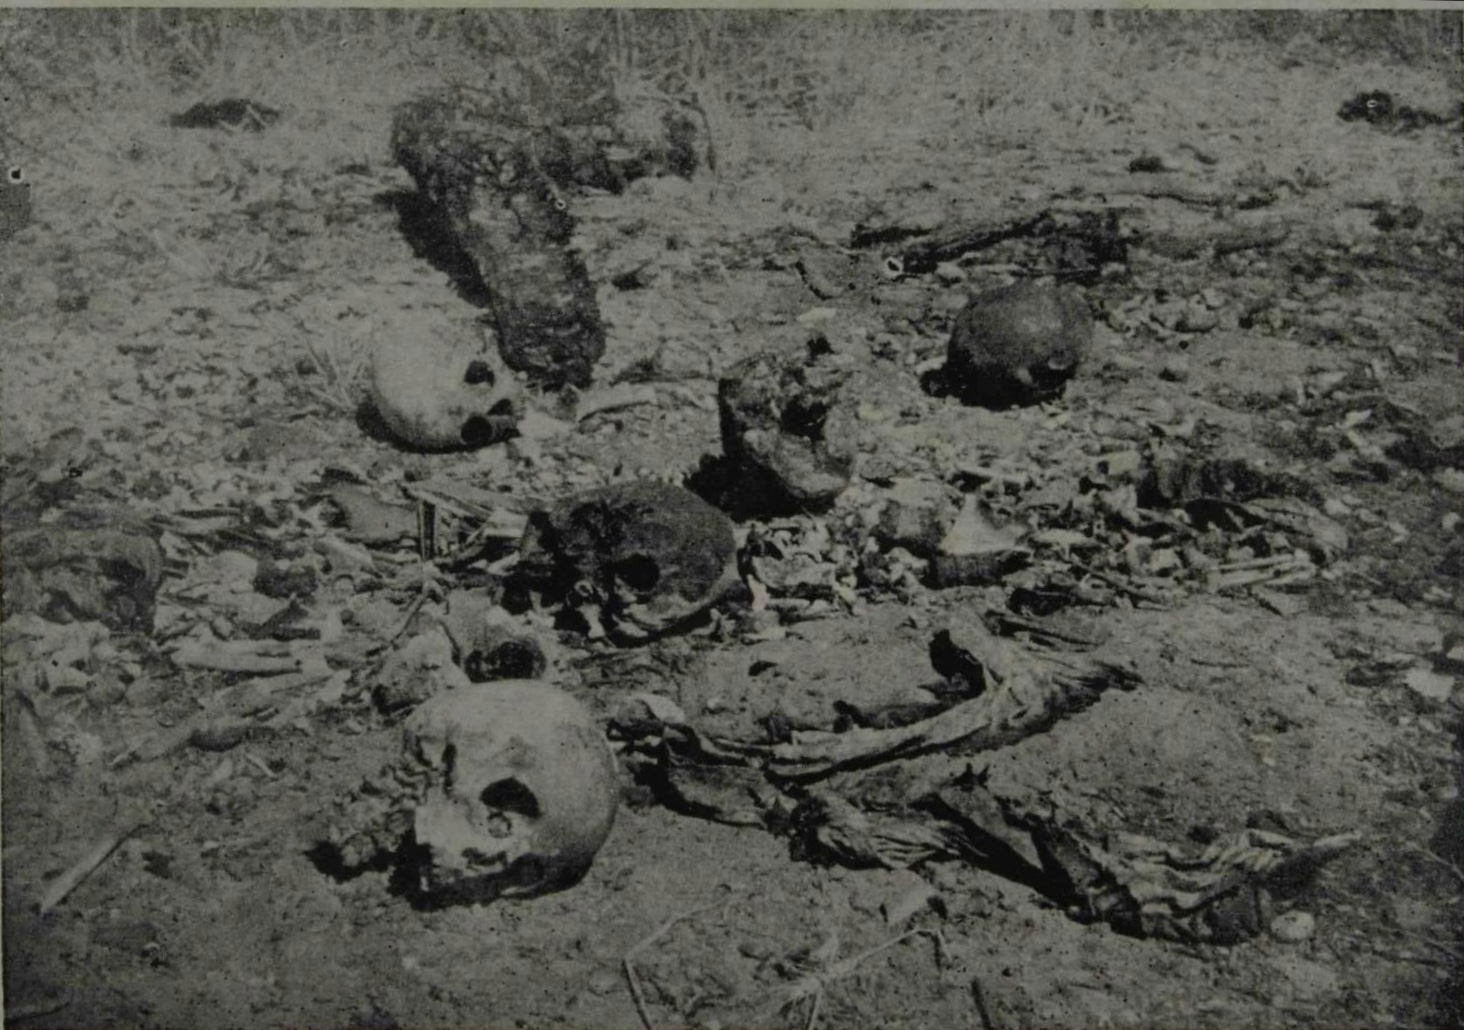 historical photograph, massacre site, human remains, skulls, bones, Vadda Ghalughara, Sikh Genocide, tragedy, aftermath